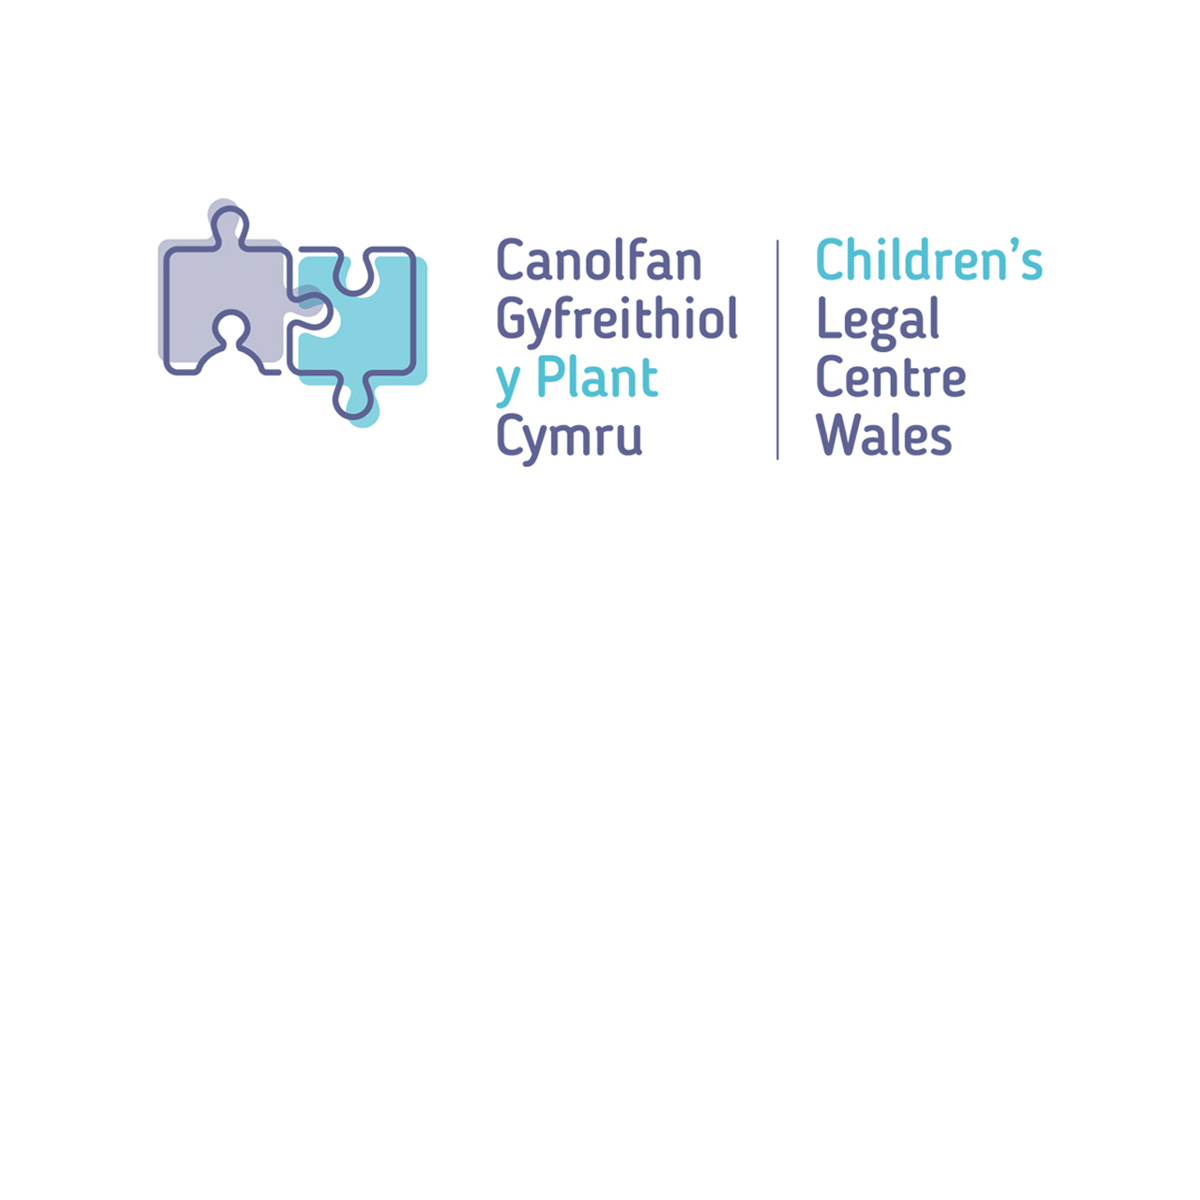 The Children's Legal Centre logo